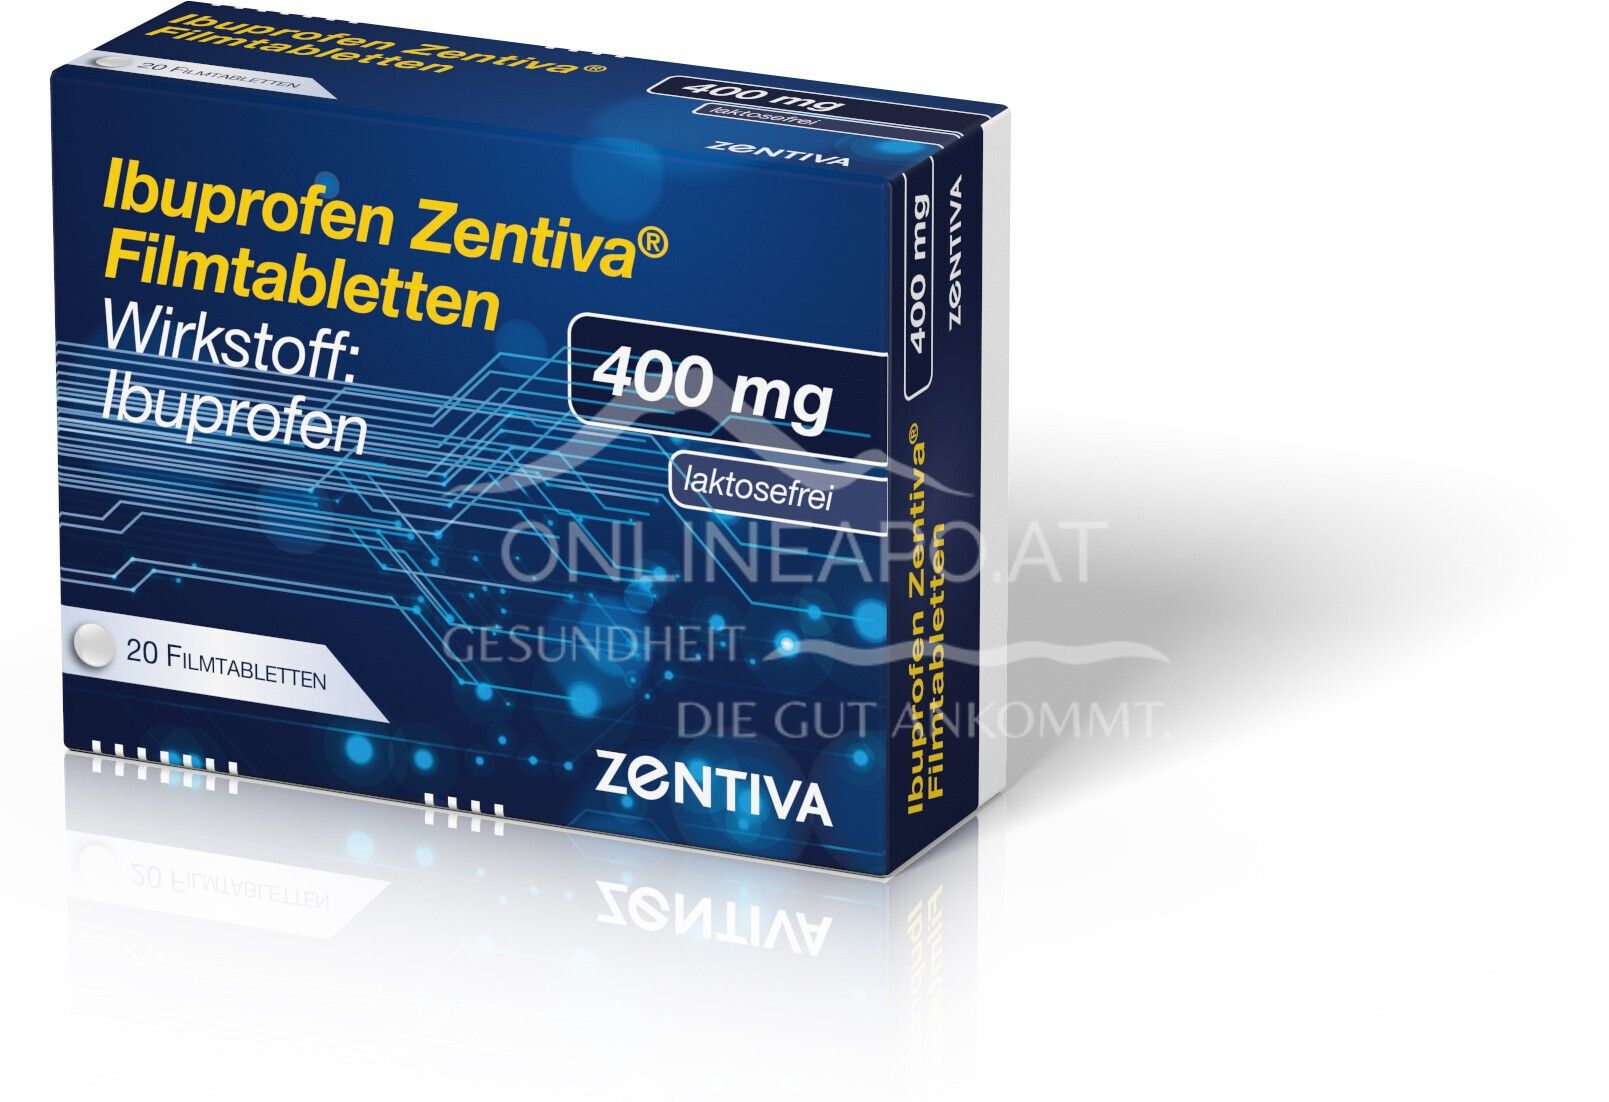 Ibuprofen Zentiva 400 mg Filmtabletten